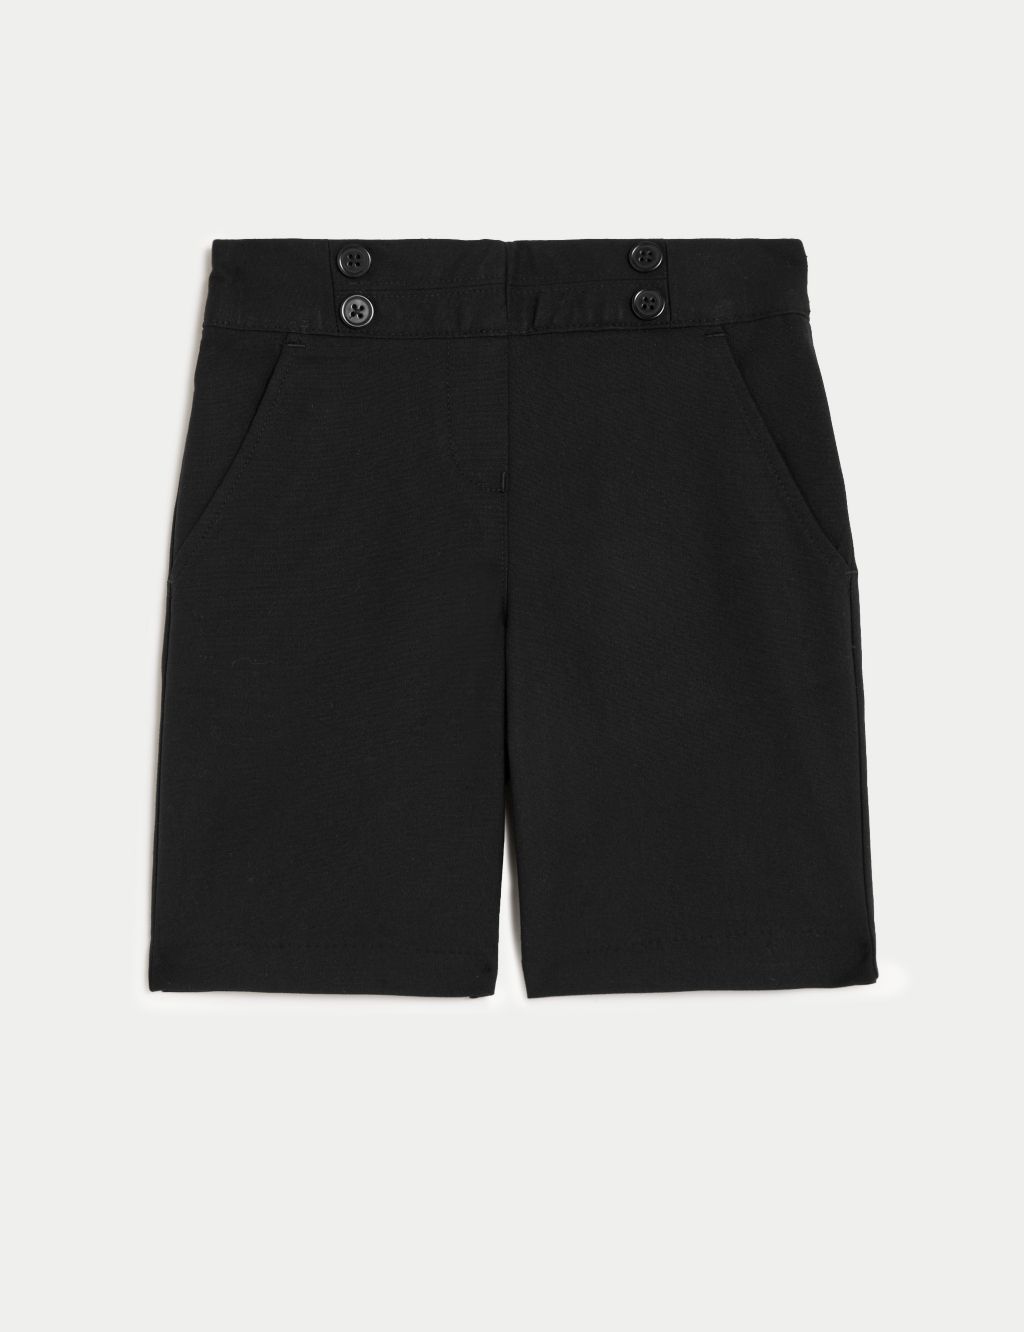 Black School Shorts | M&S